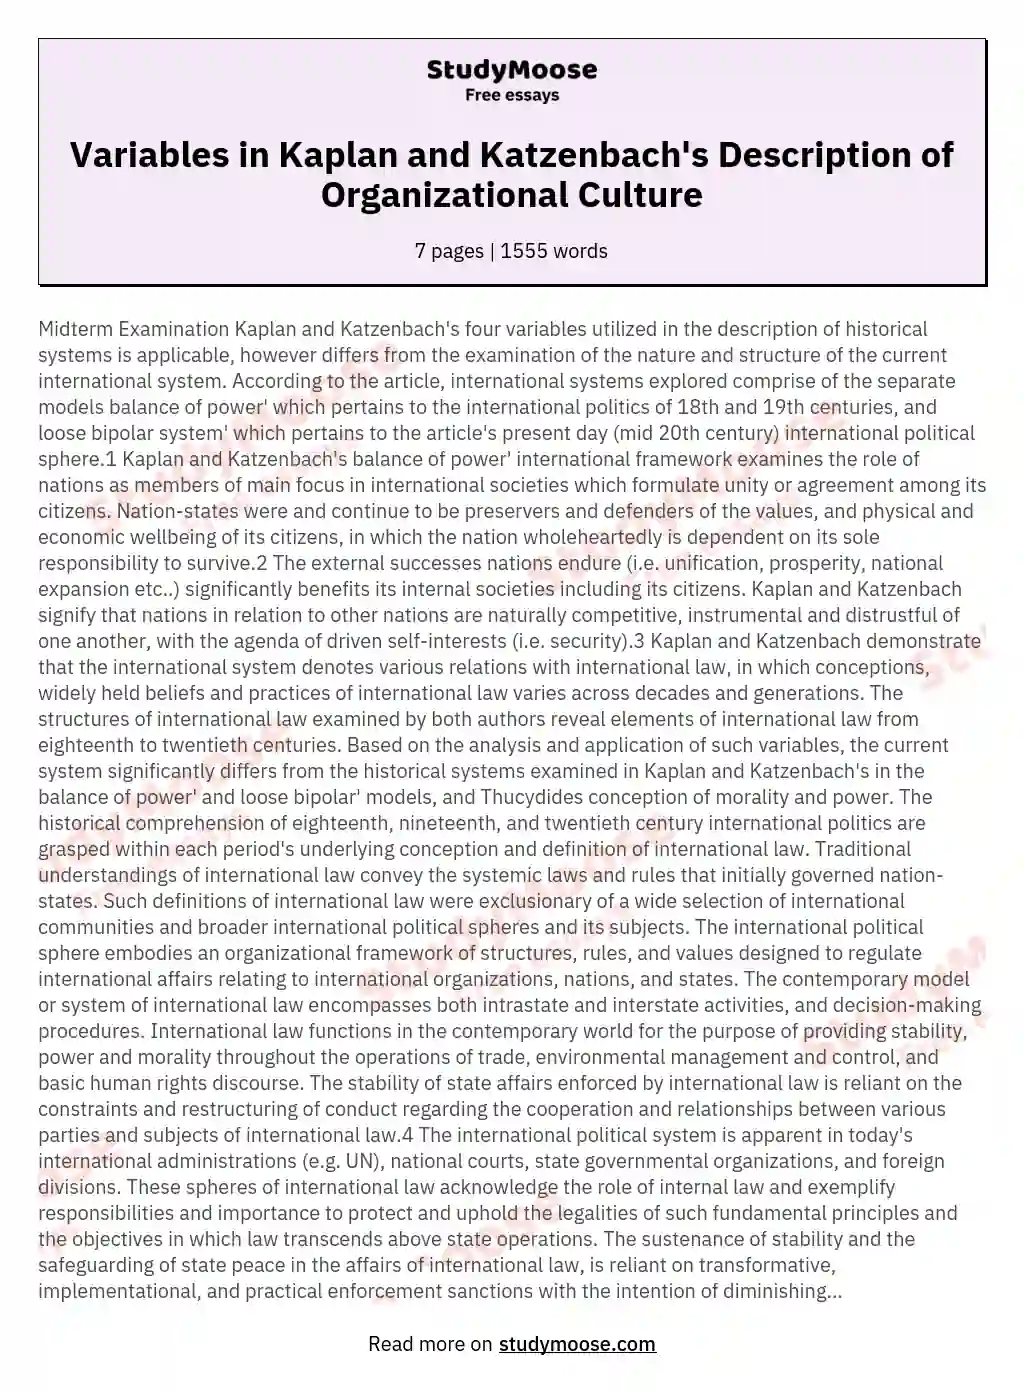 Variables in Kaplan and Katzenbach's Description of Organizational Culture essay